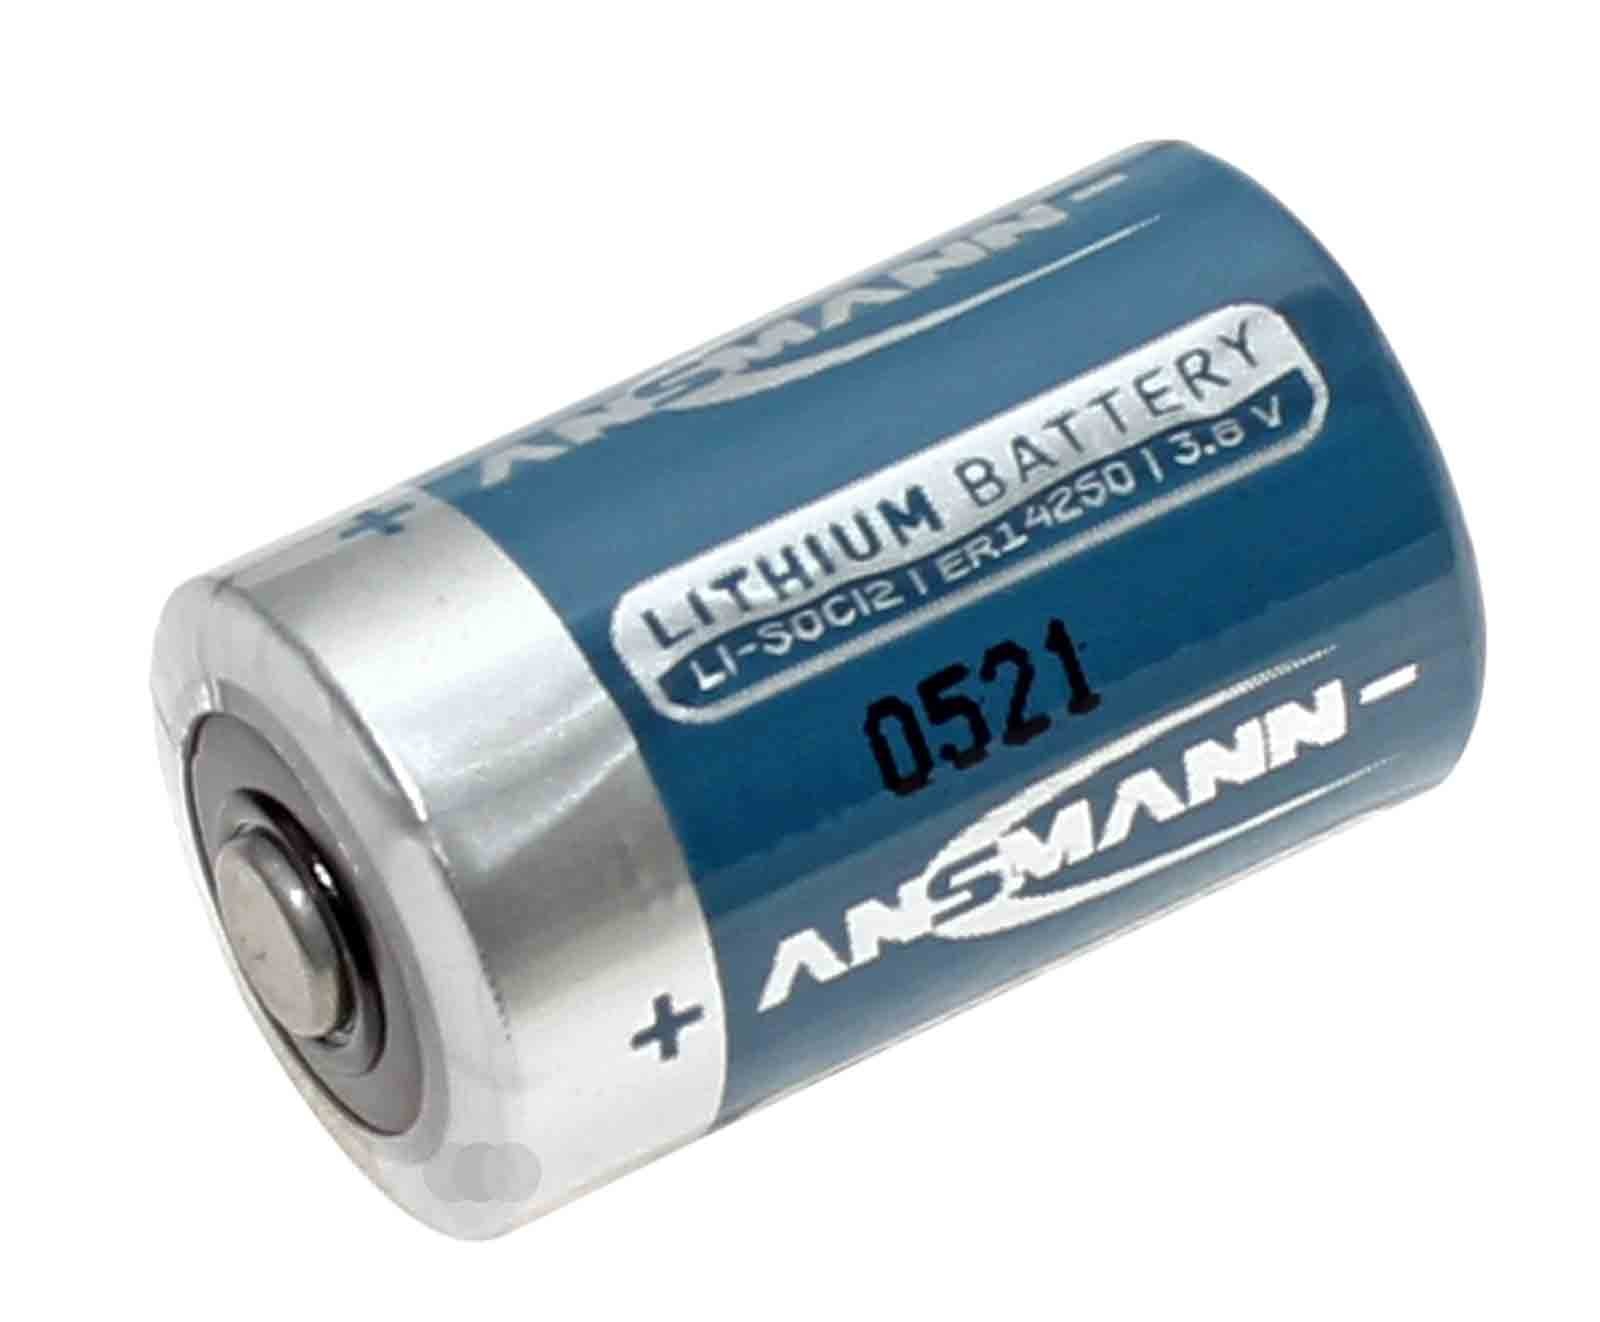 Ansmann A23 Alkaline Batterie, LR23 MN21 L1028 LRV08 G23A E23A